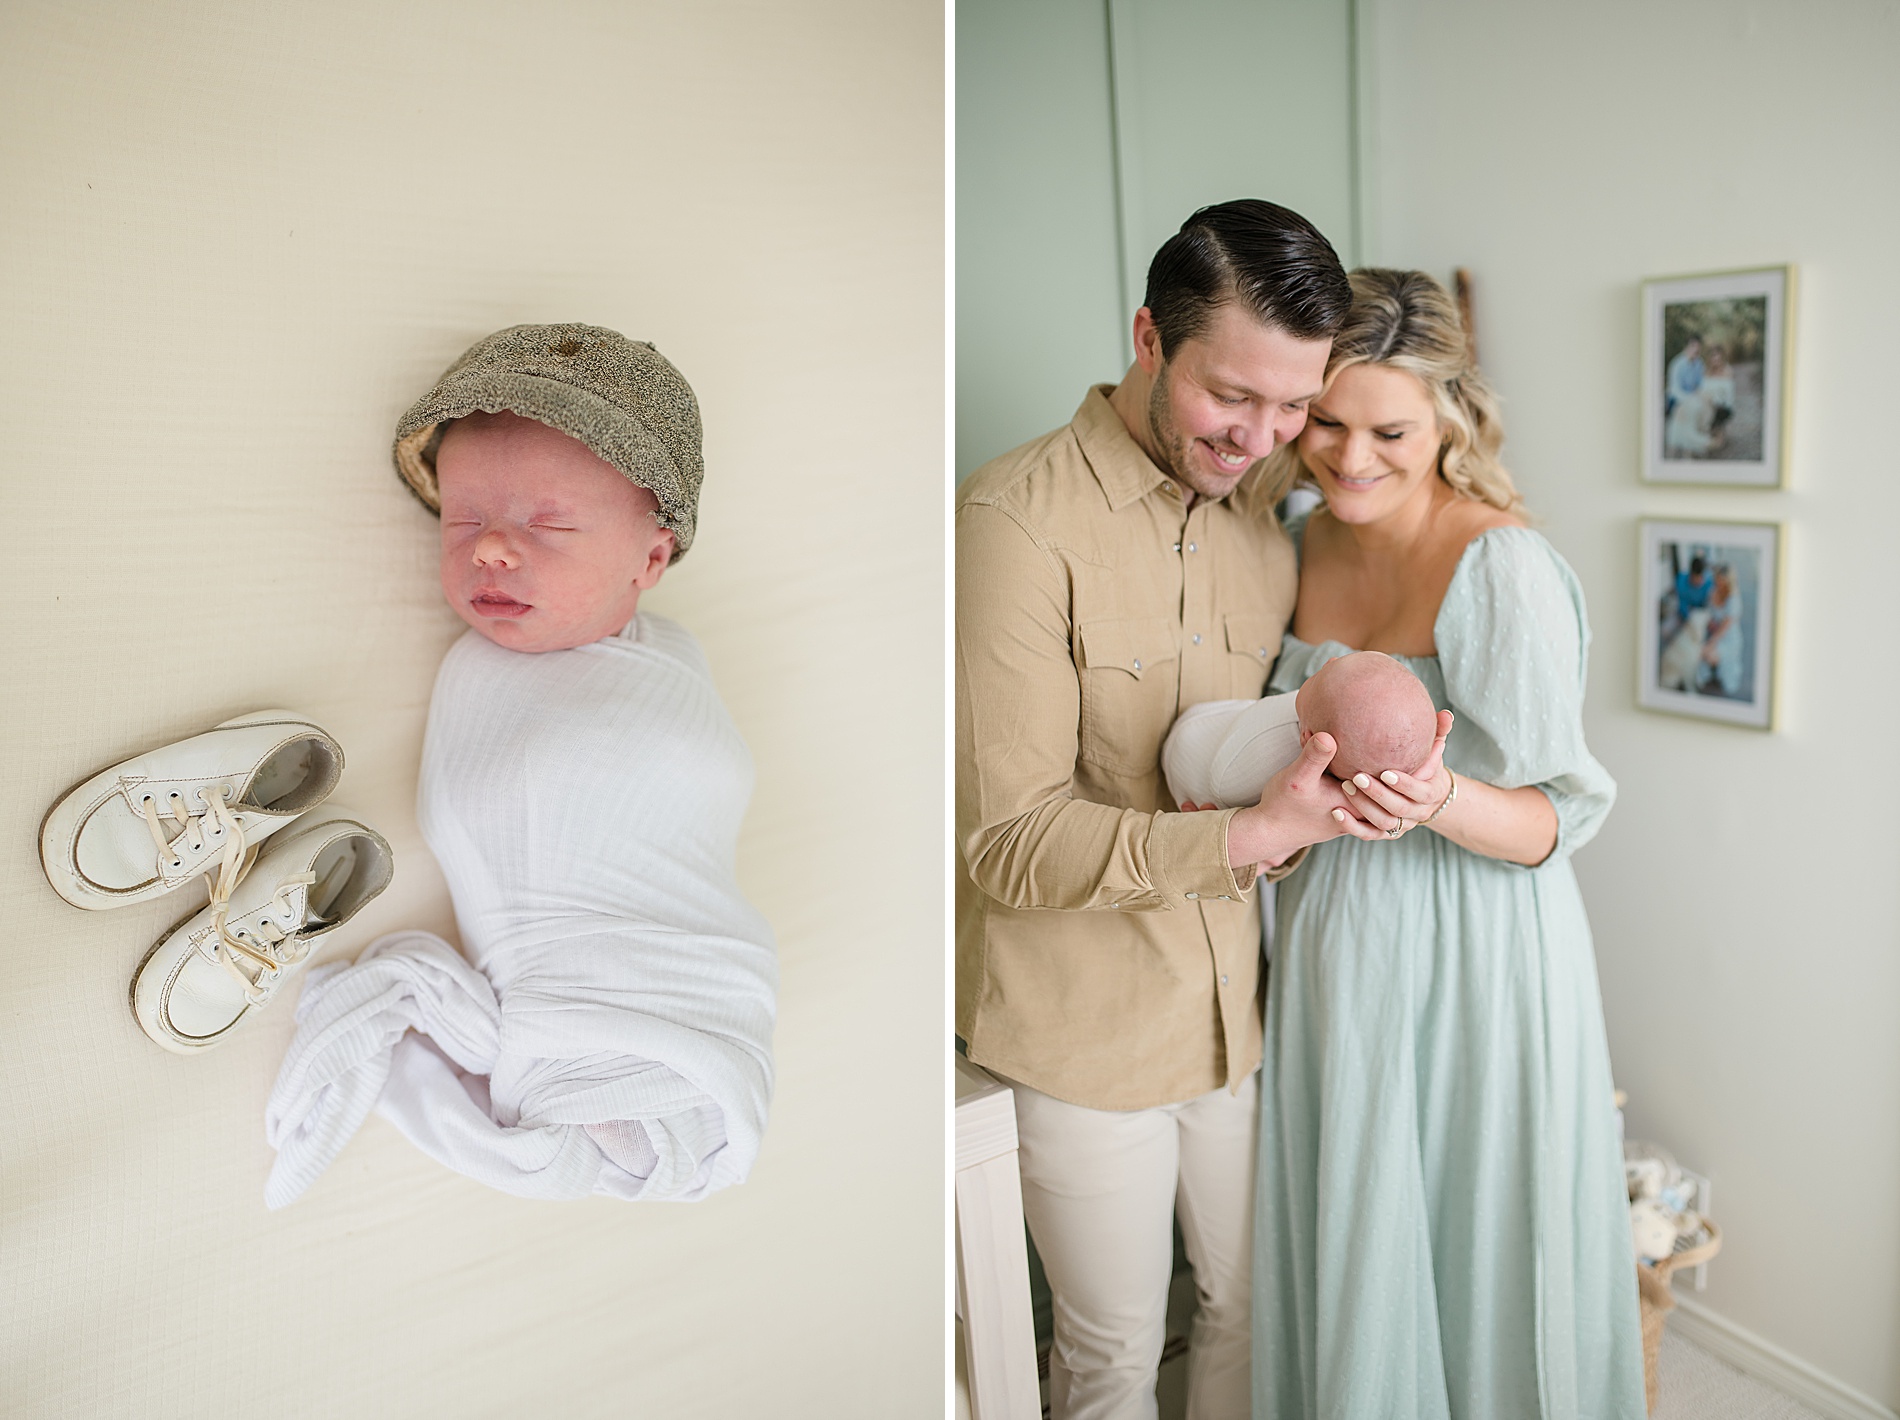 Dallas,TX In-Home Newborn Session 
taken by Dallas Newborn photographer, Lindsey Dutton Photography
